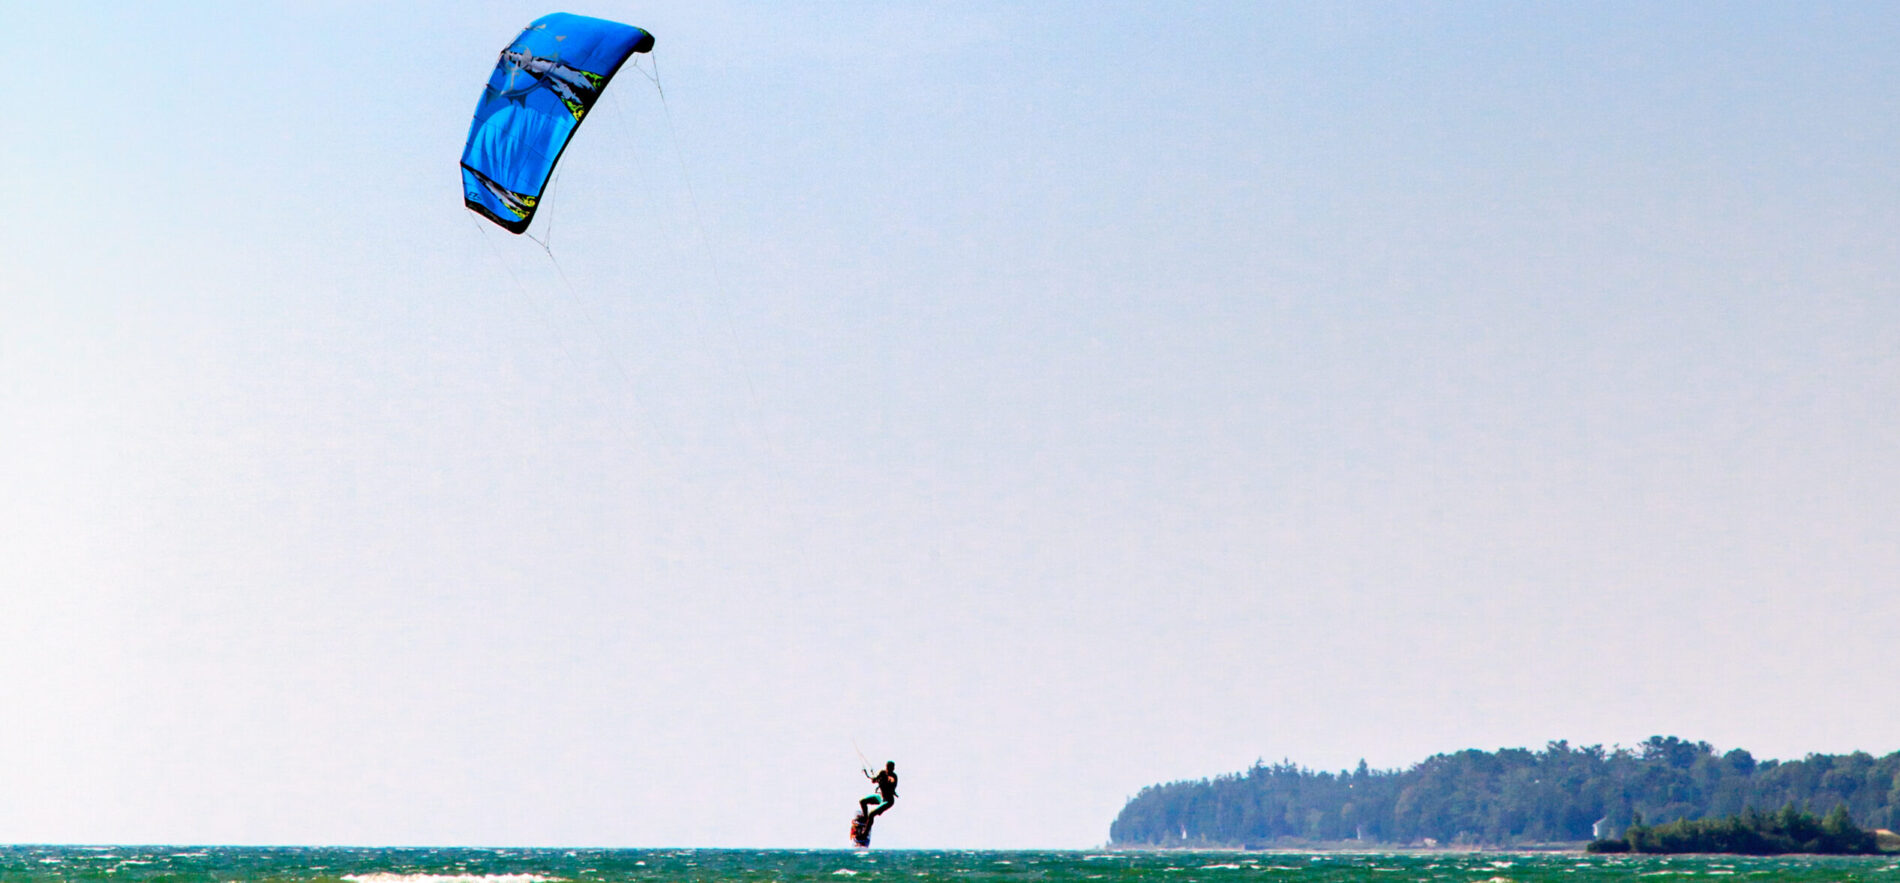 Kitesurfer on the water